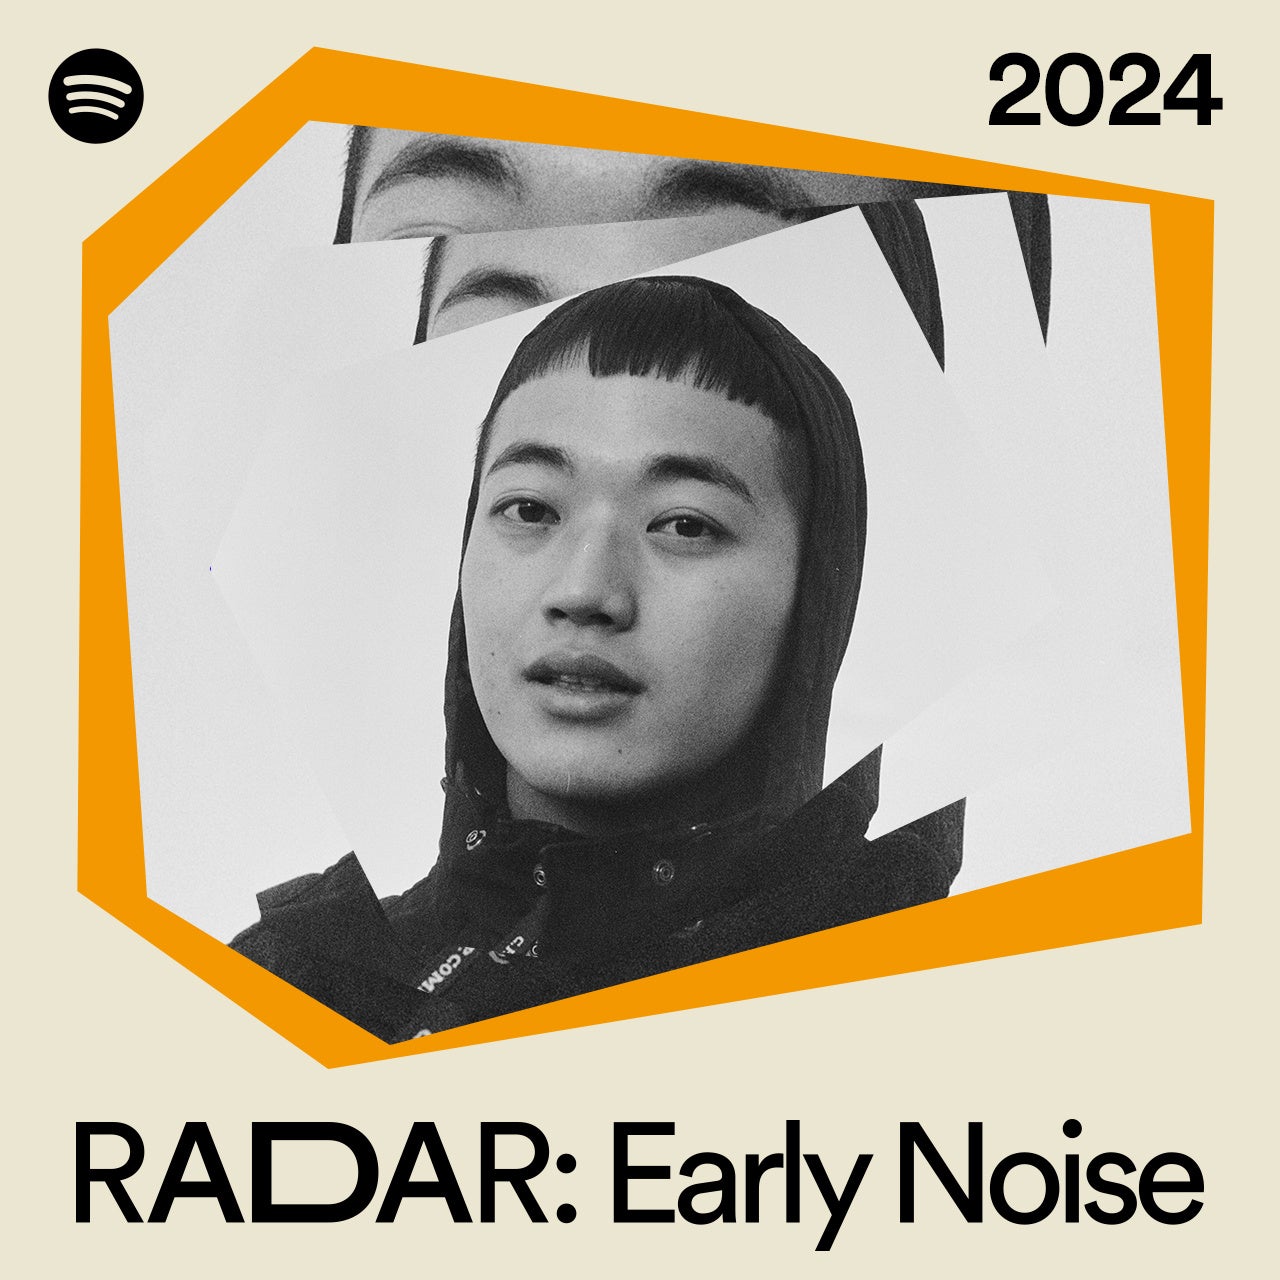 Spotifyが2024年に躍進を期待する次世代アーティスト「RADAR: Early Noise 2024」を発表